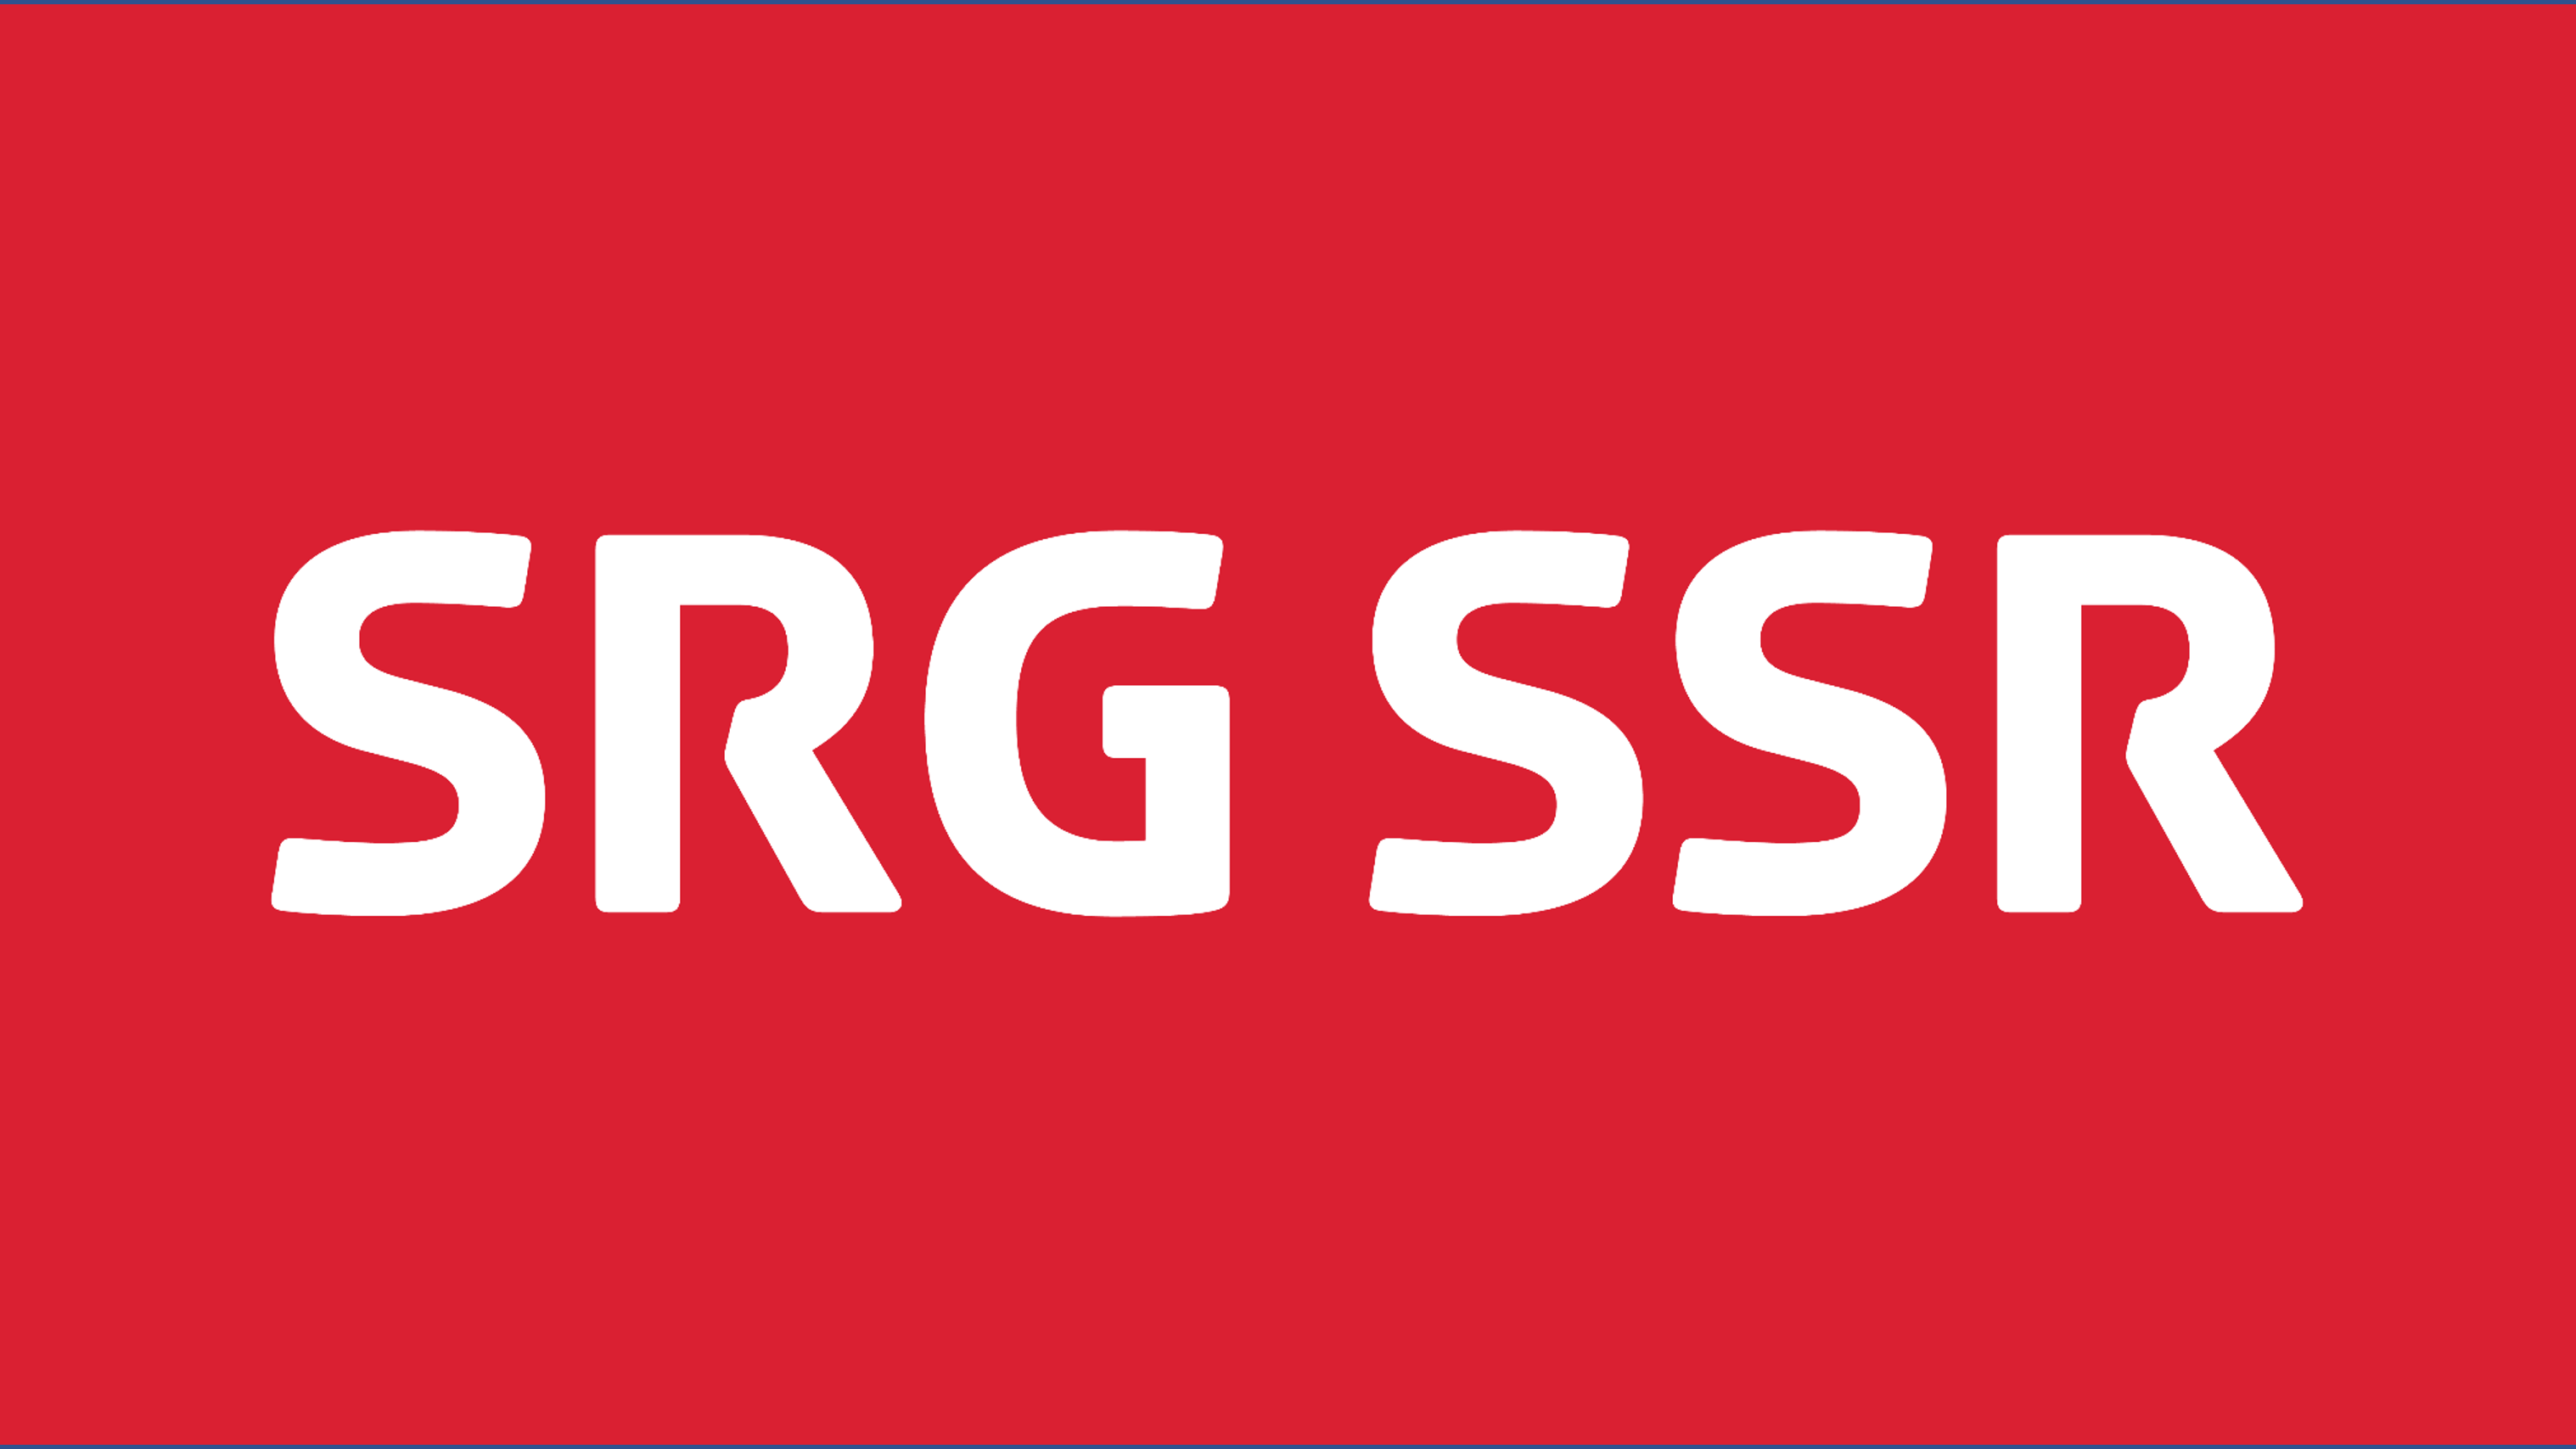 Que signifie SRG SSR?